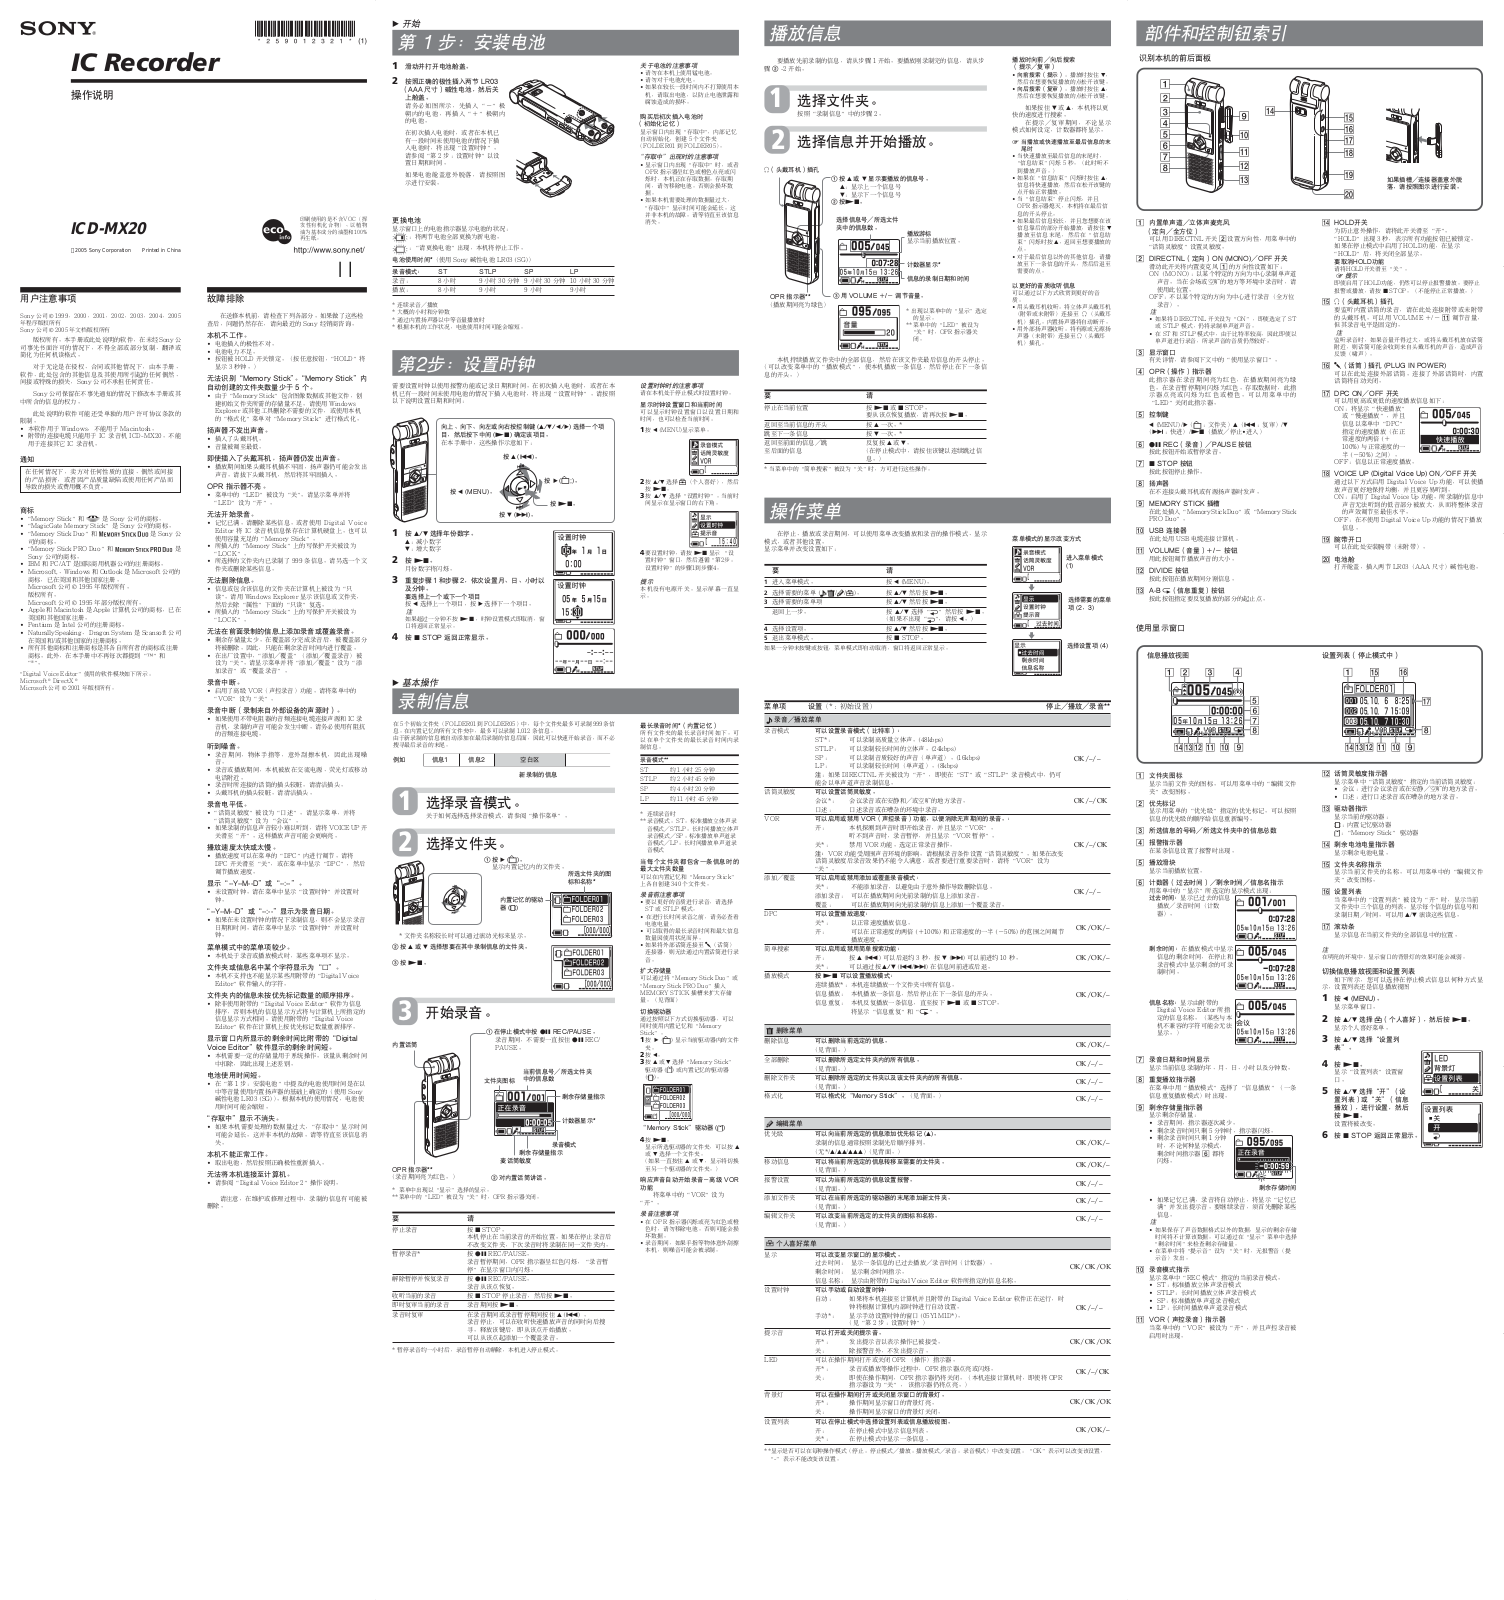 SONY ICD-MX20 User Manual